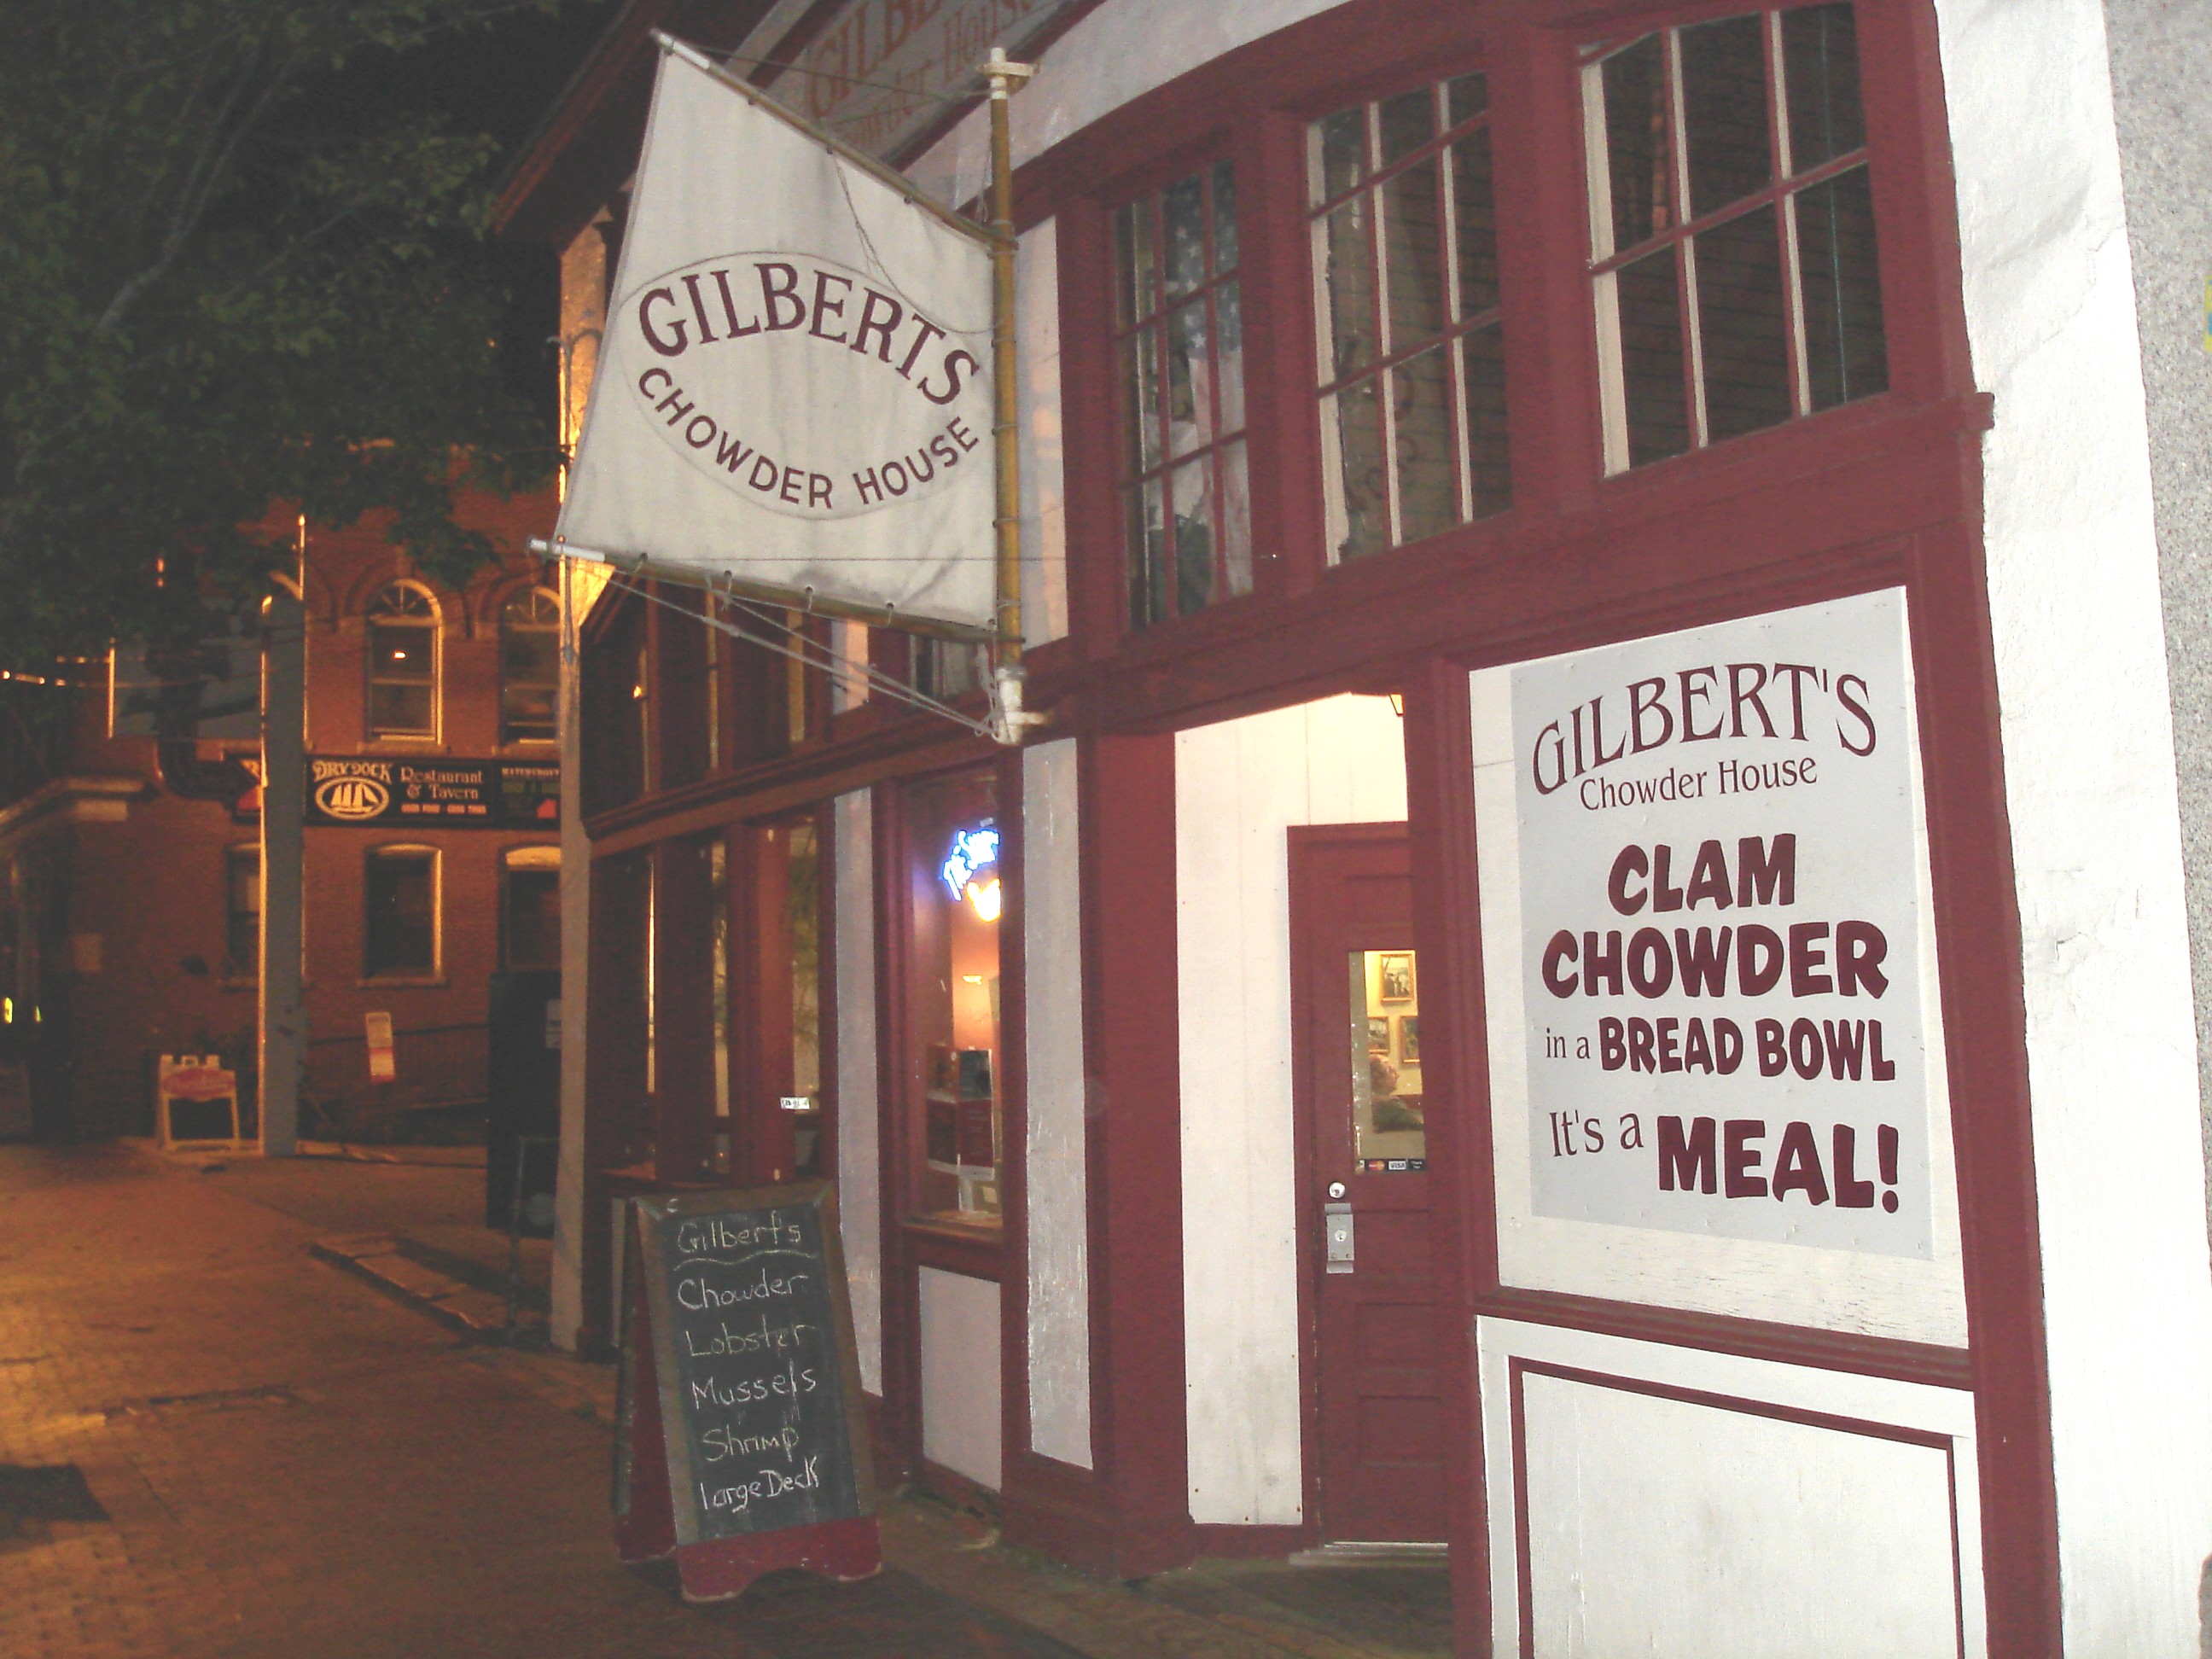 Gilbert's chowder house /  Portland, Maine USA.   11 octobre 2009